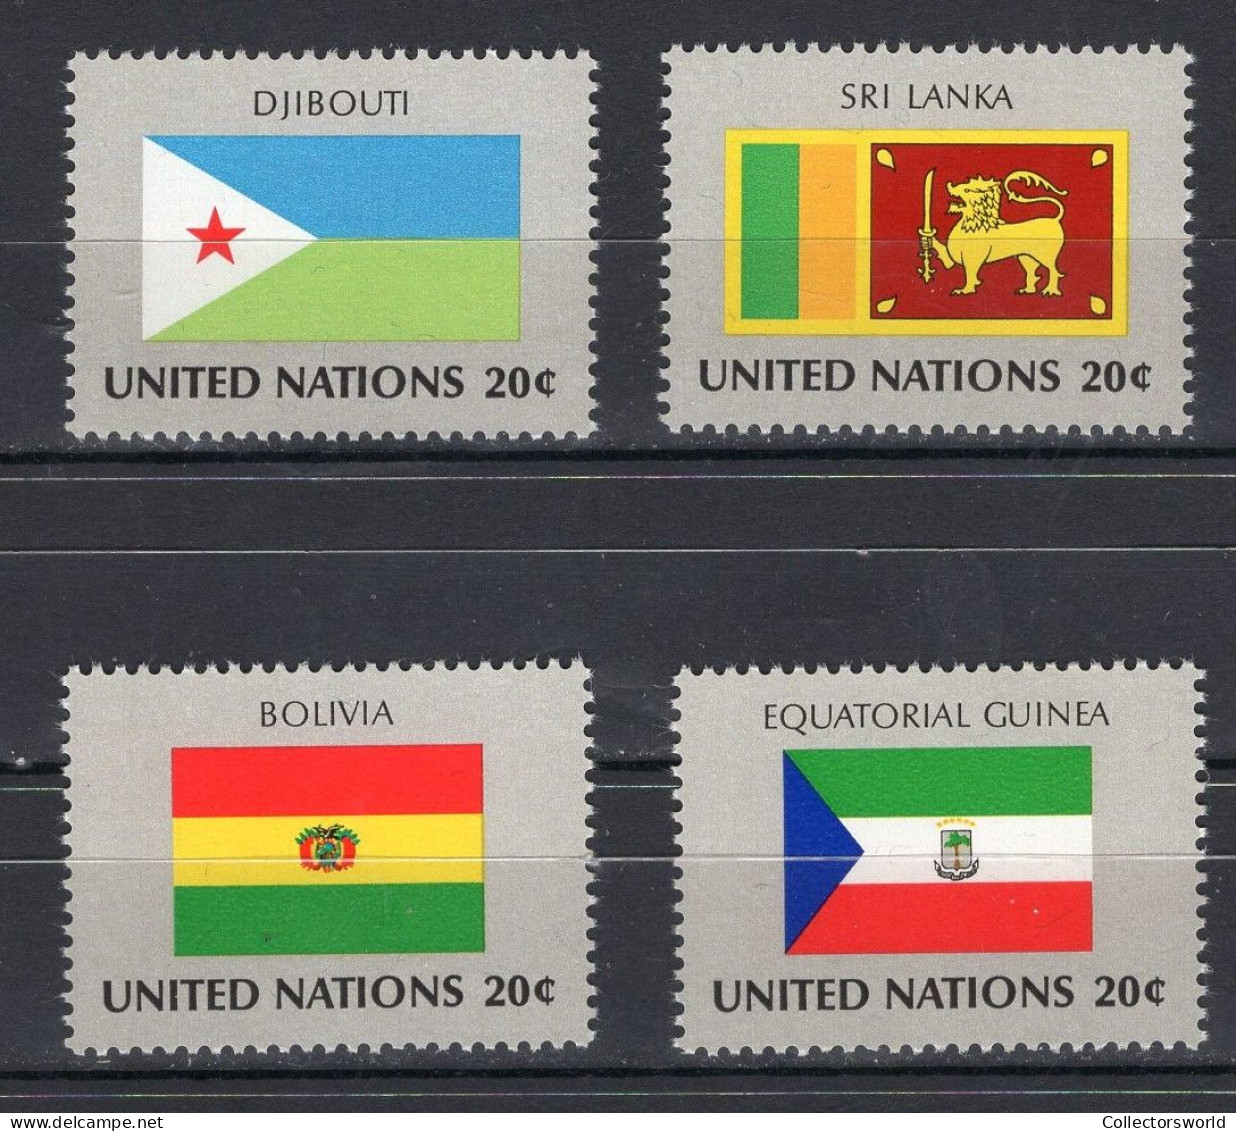 United Nations UN New York Serie 4v 1981 Flag Serie Sri Lanka Djibouti Bolivia Equatorial Guinea MNH - Nuevos